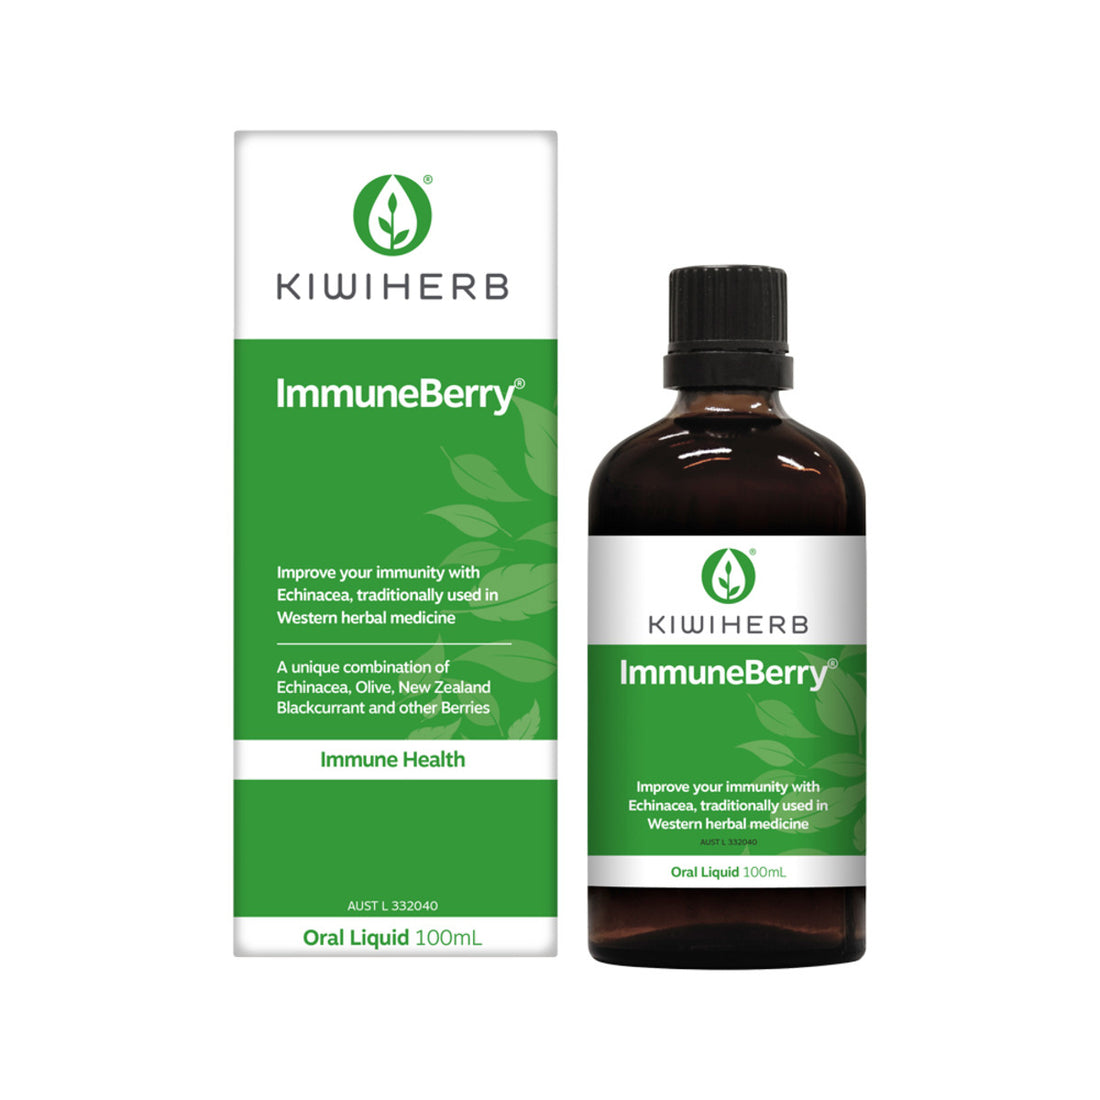 Kiwiherb ImmuneBerry Oral Liquid 100ml